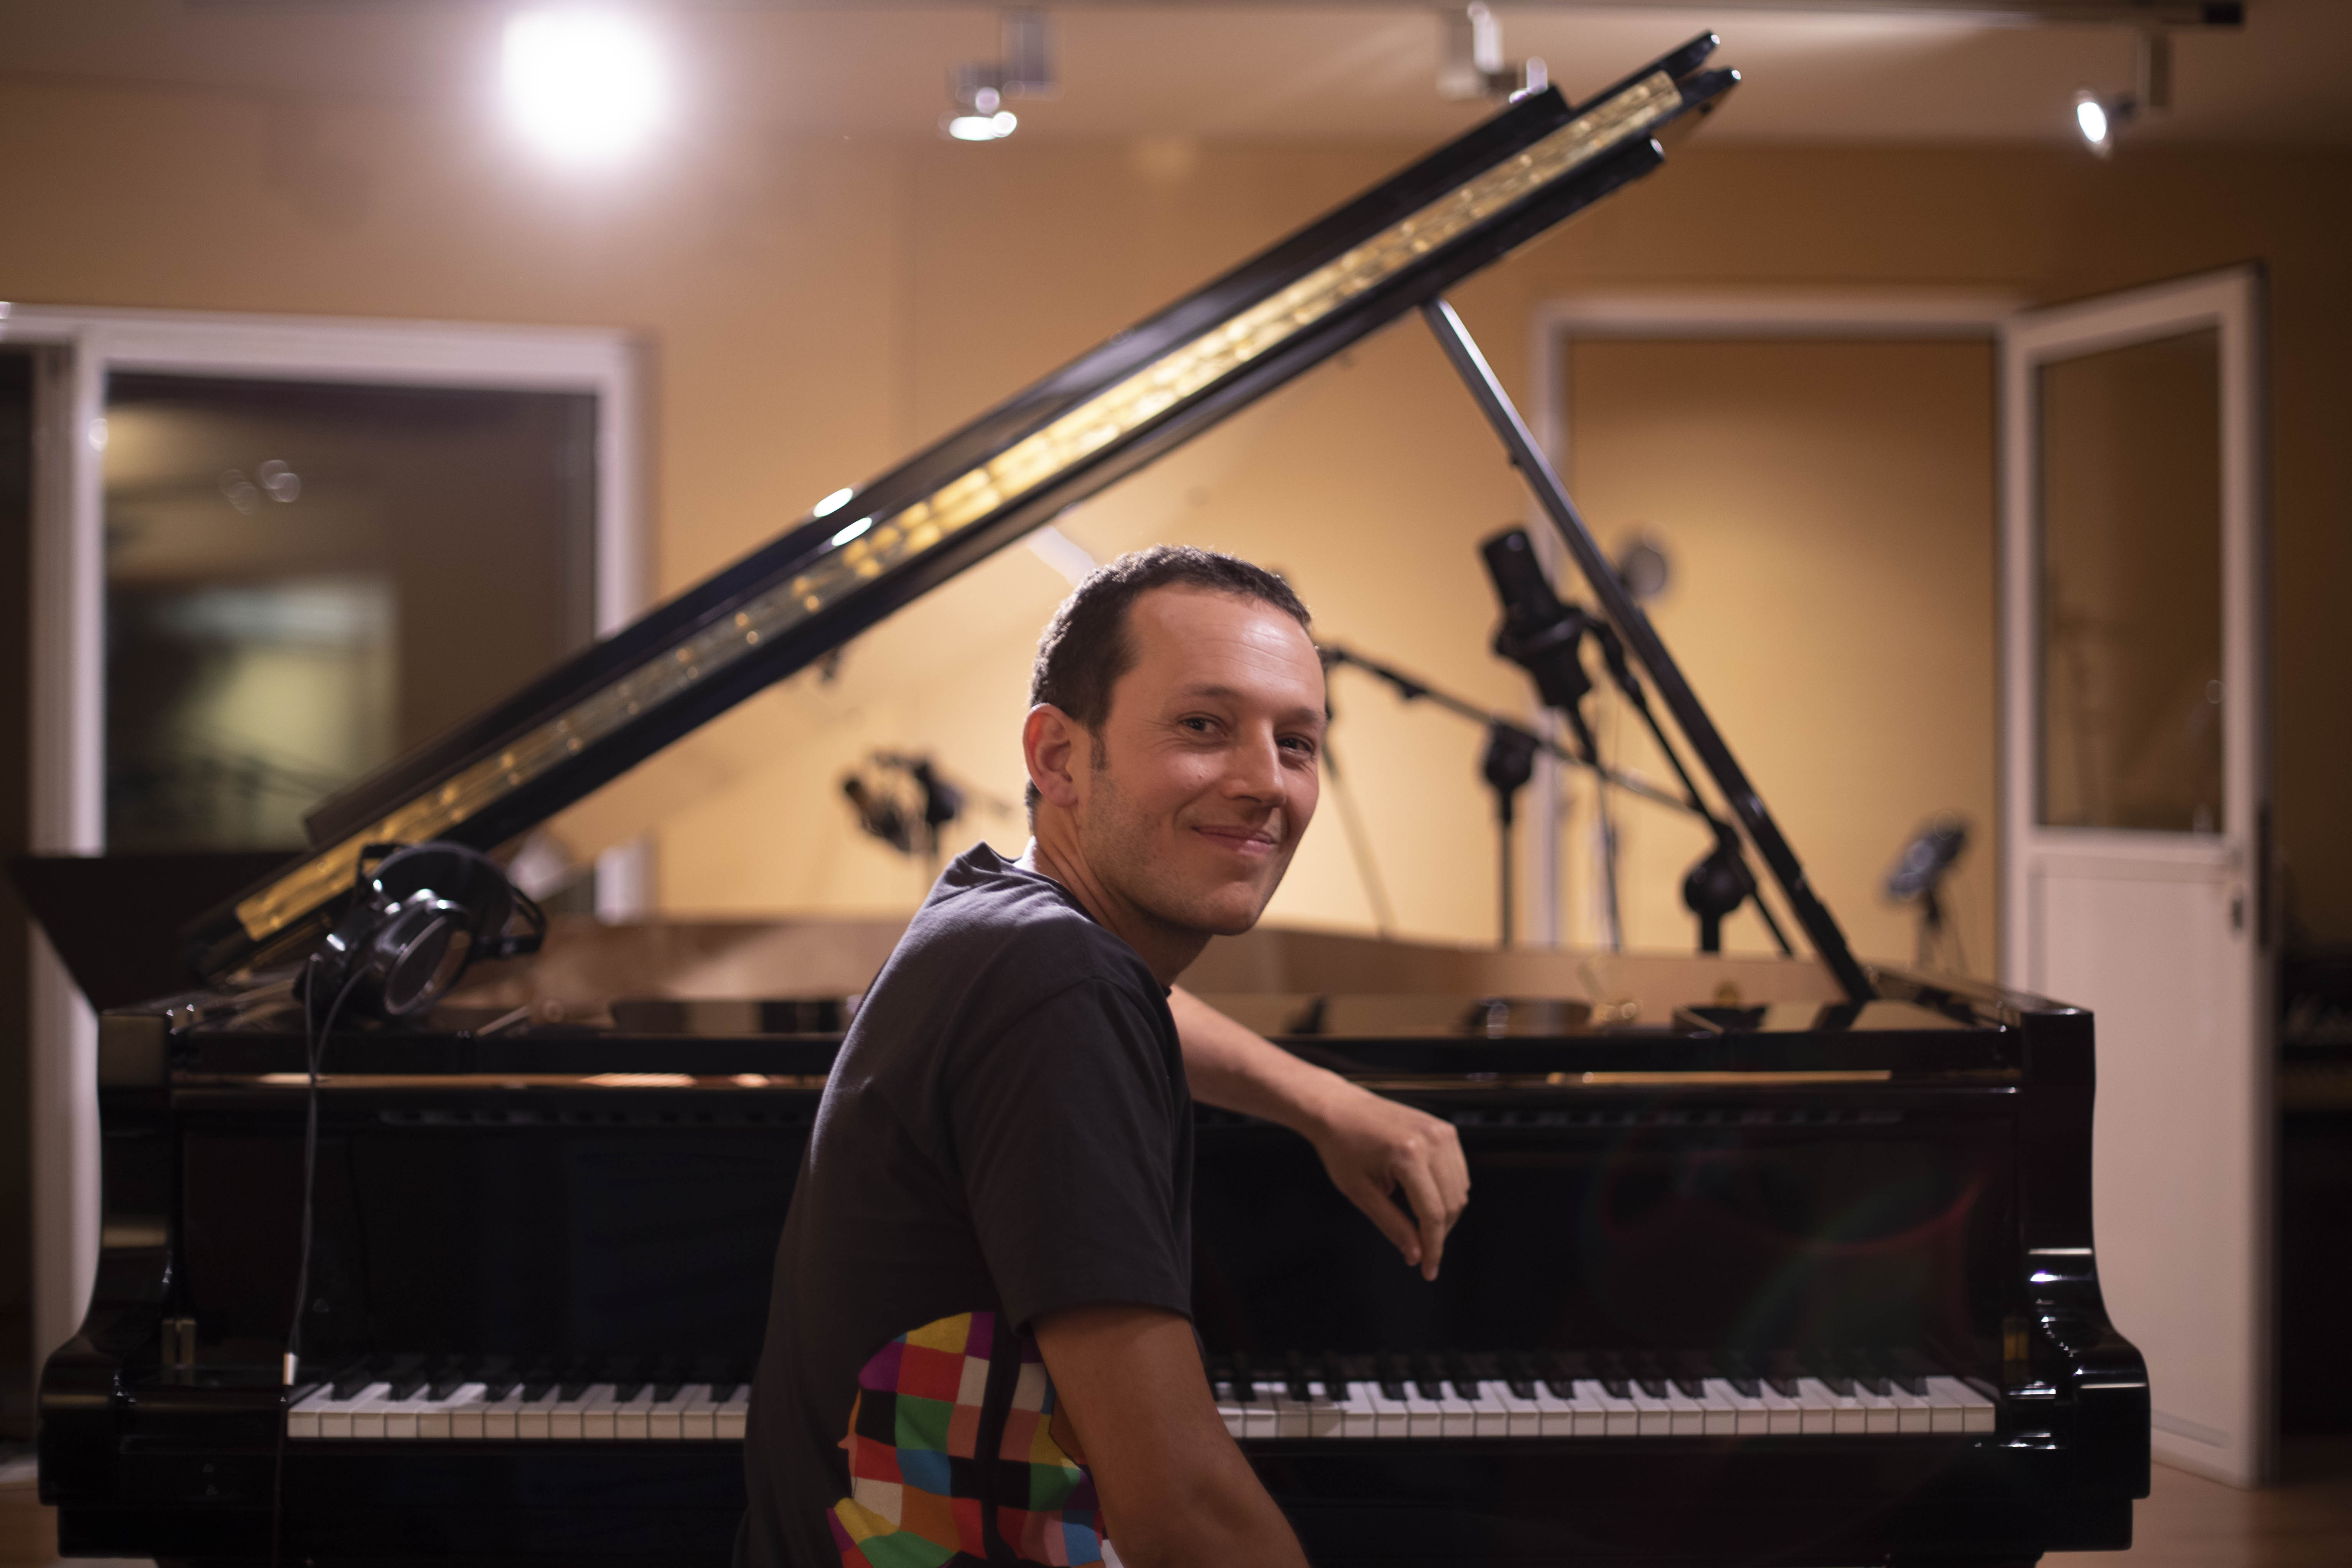 Pablo Pareja playing piano at a recording studio